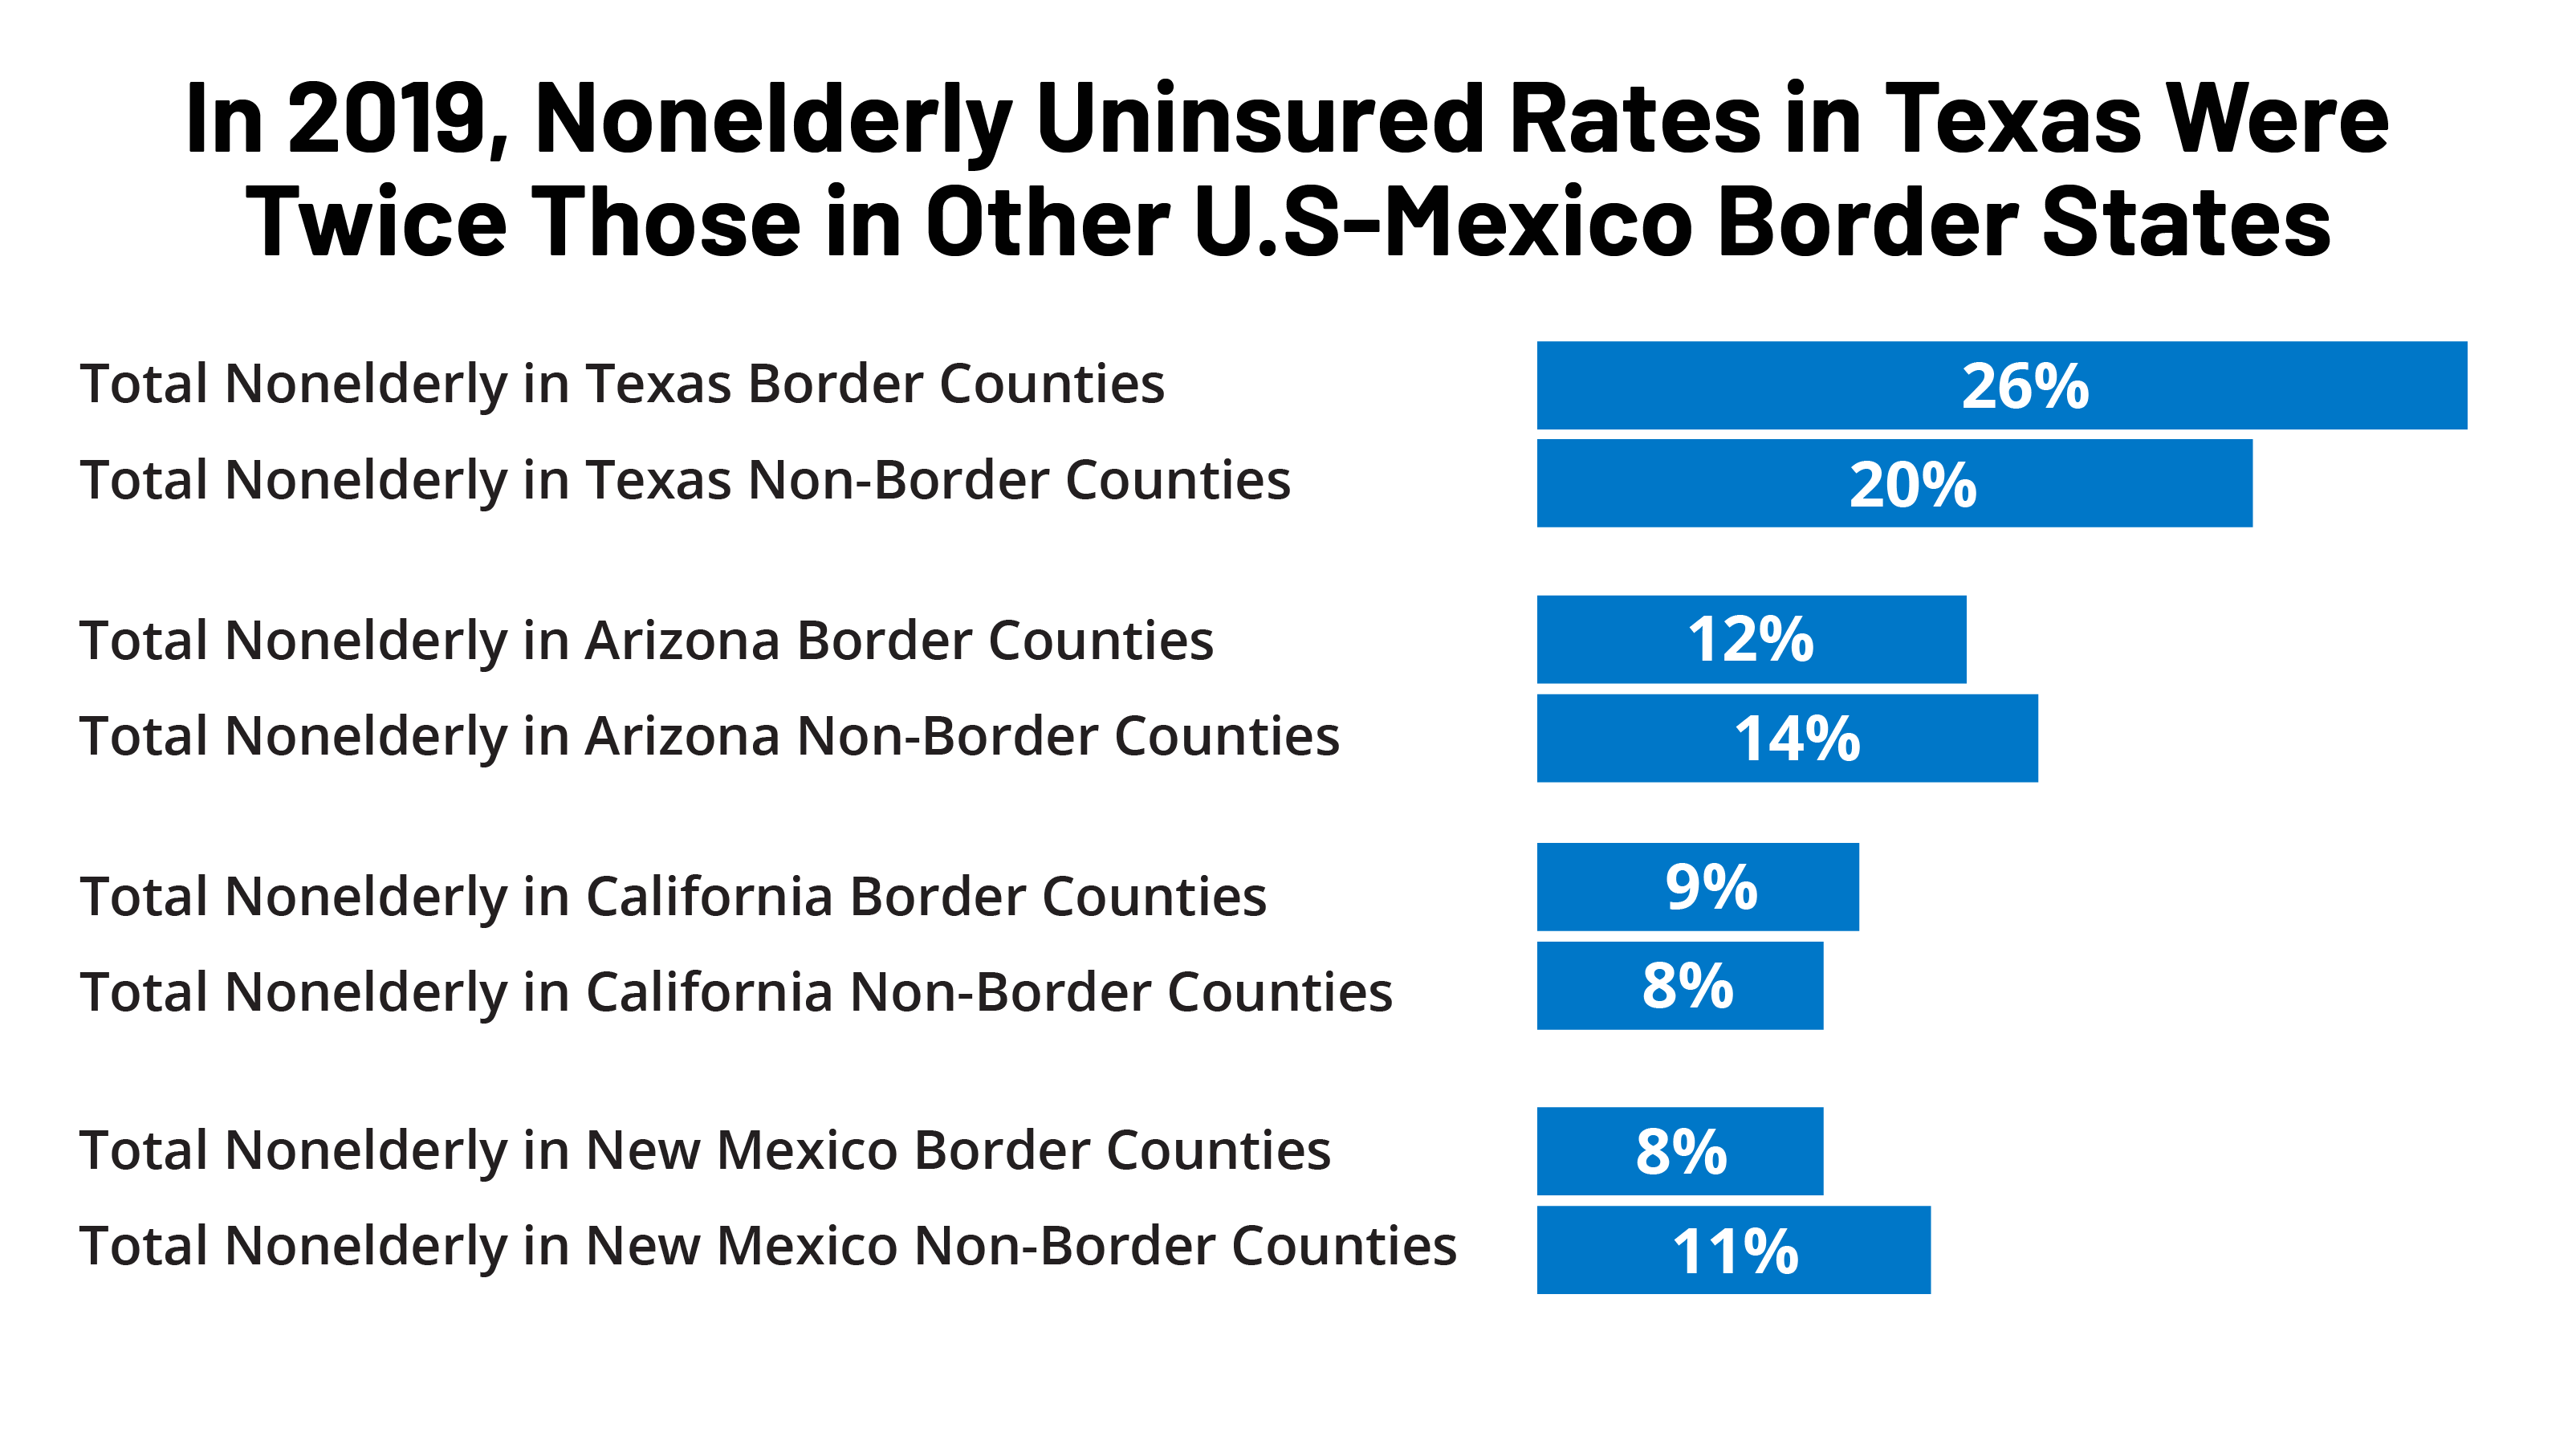 Health and Health Care in the U.S.-Mexico Border Region